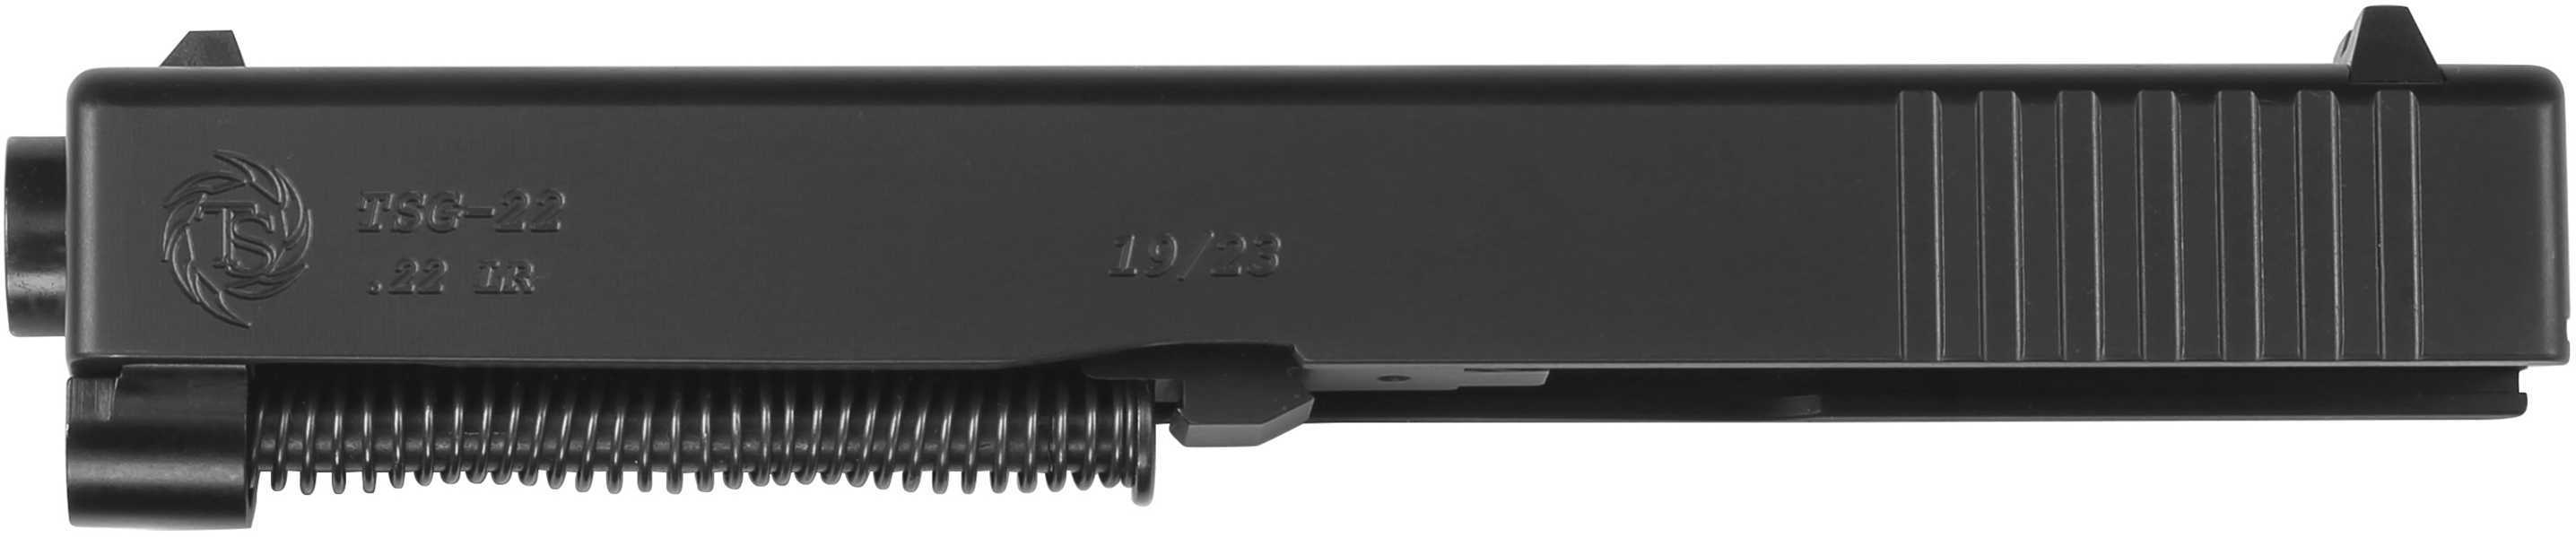 TSG-22 Glock .22LR Conversion 19/23 Non-Threaded